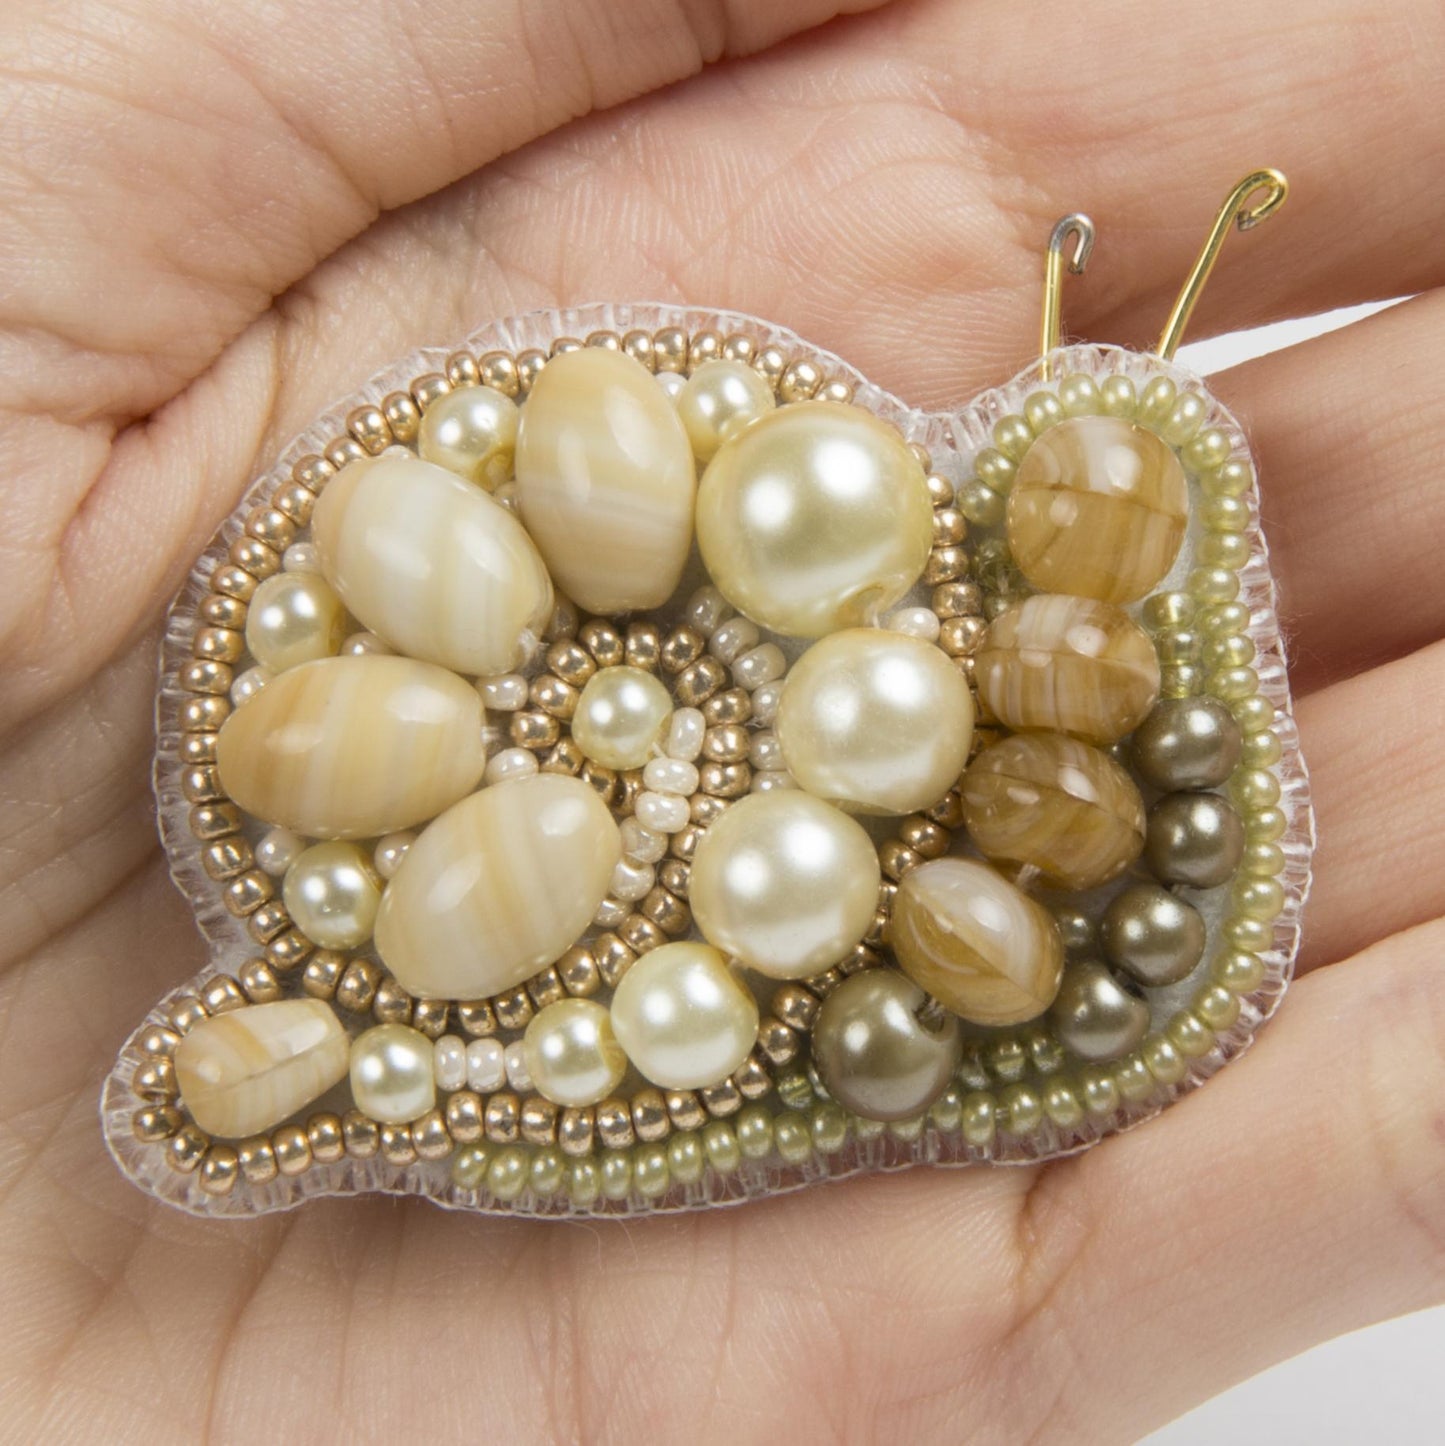 BP-249 Beadwork kit for creating broоch Crystal Art "Snail" - Leo Hobby